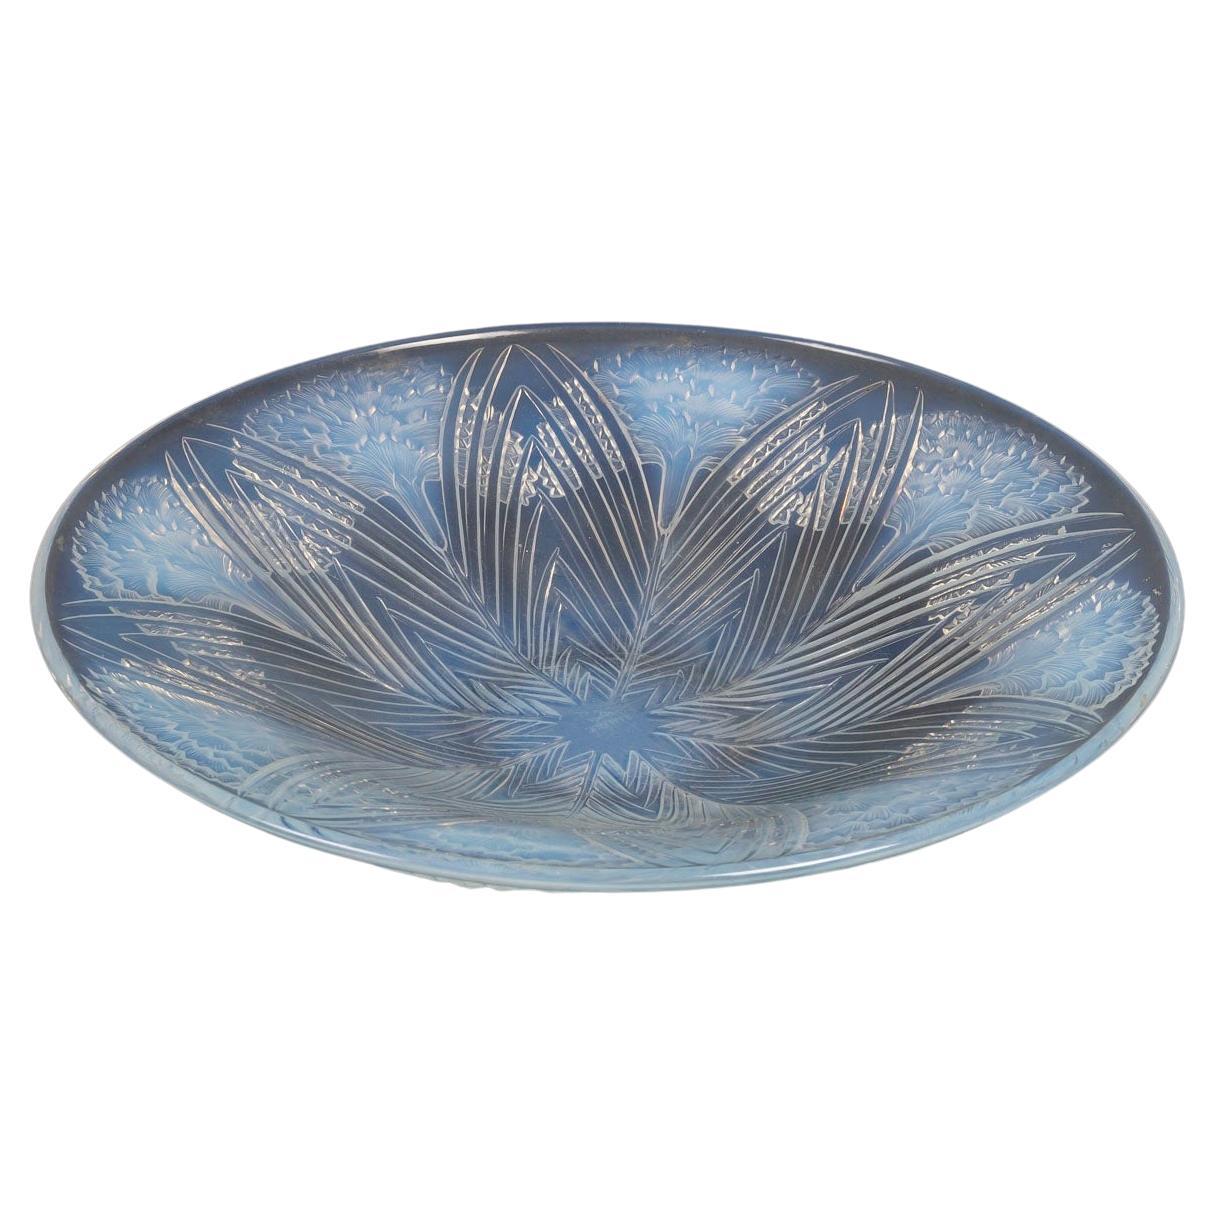 1932 René Lalique - Bowl Plate Dish Oeillets Opalescent Glass Carnations For Sale